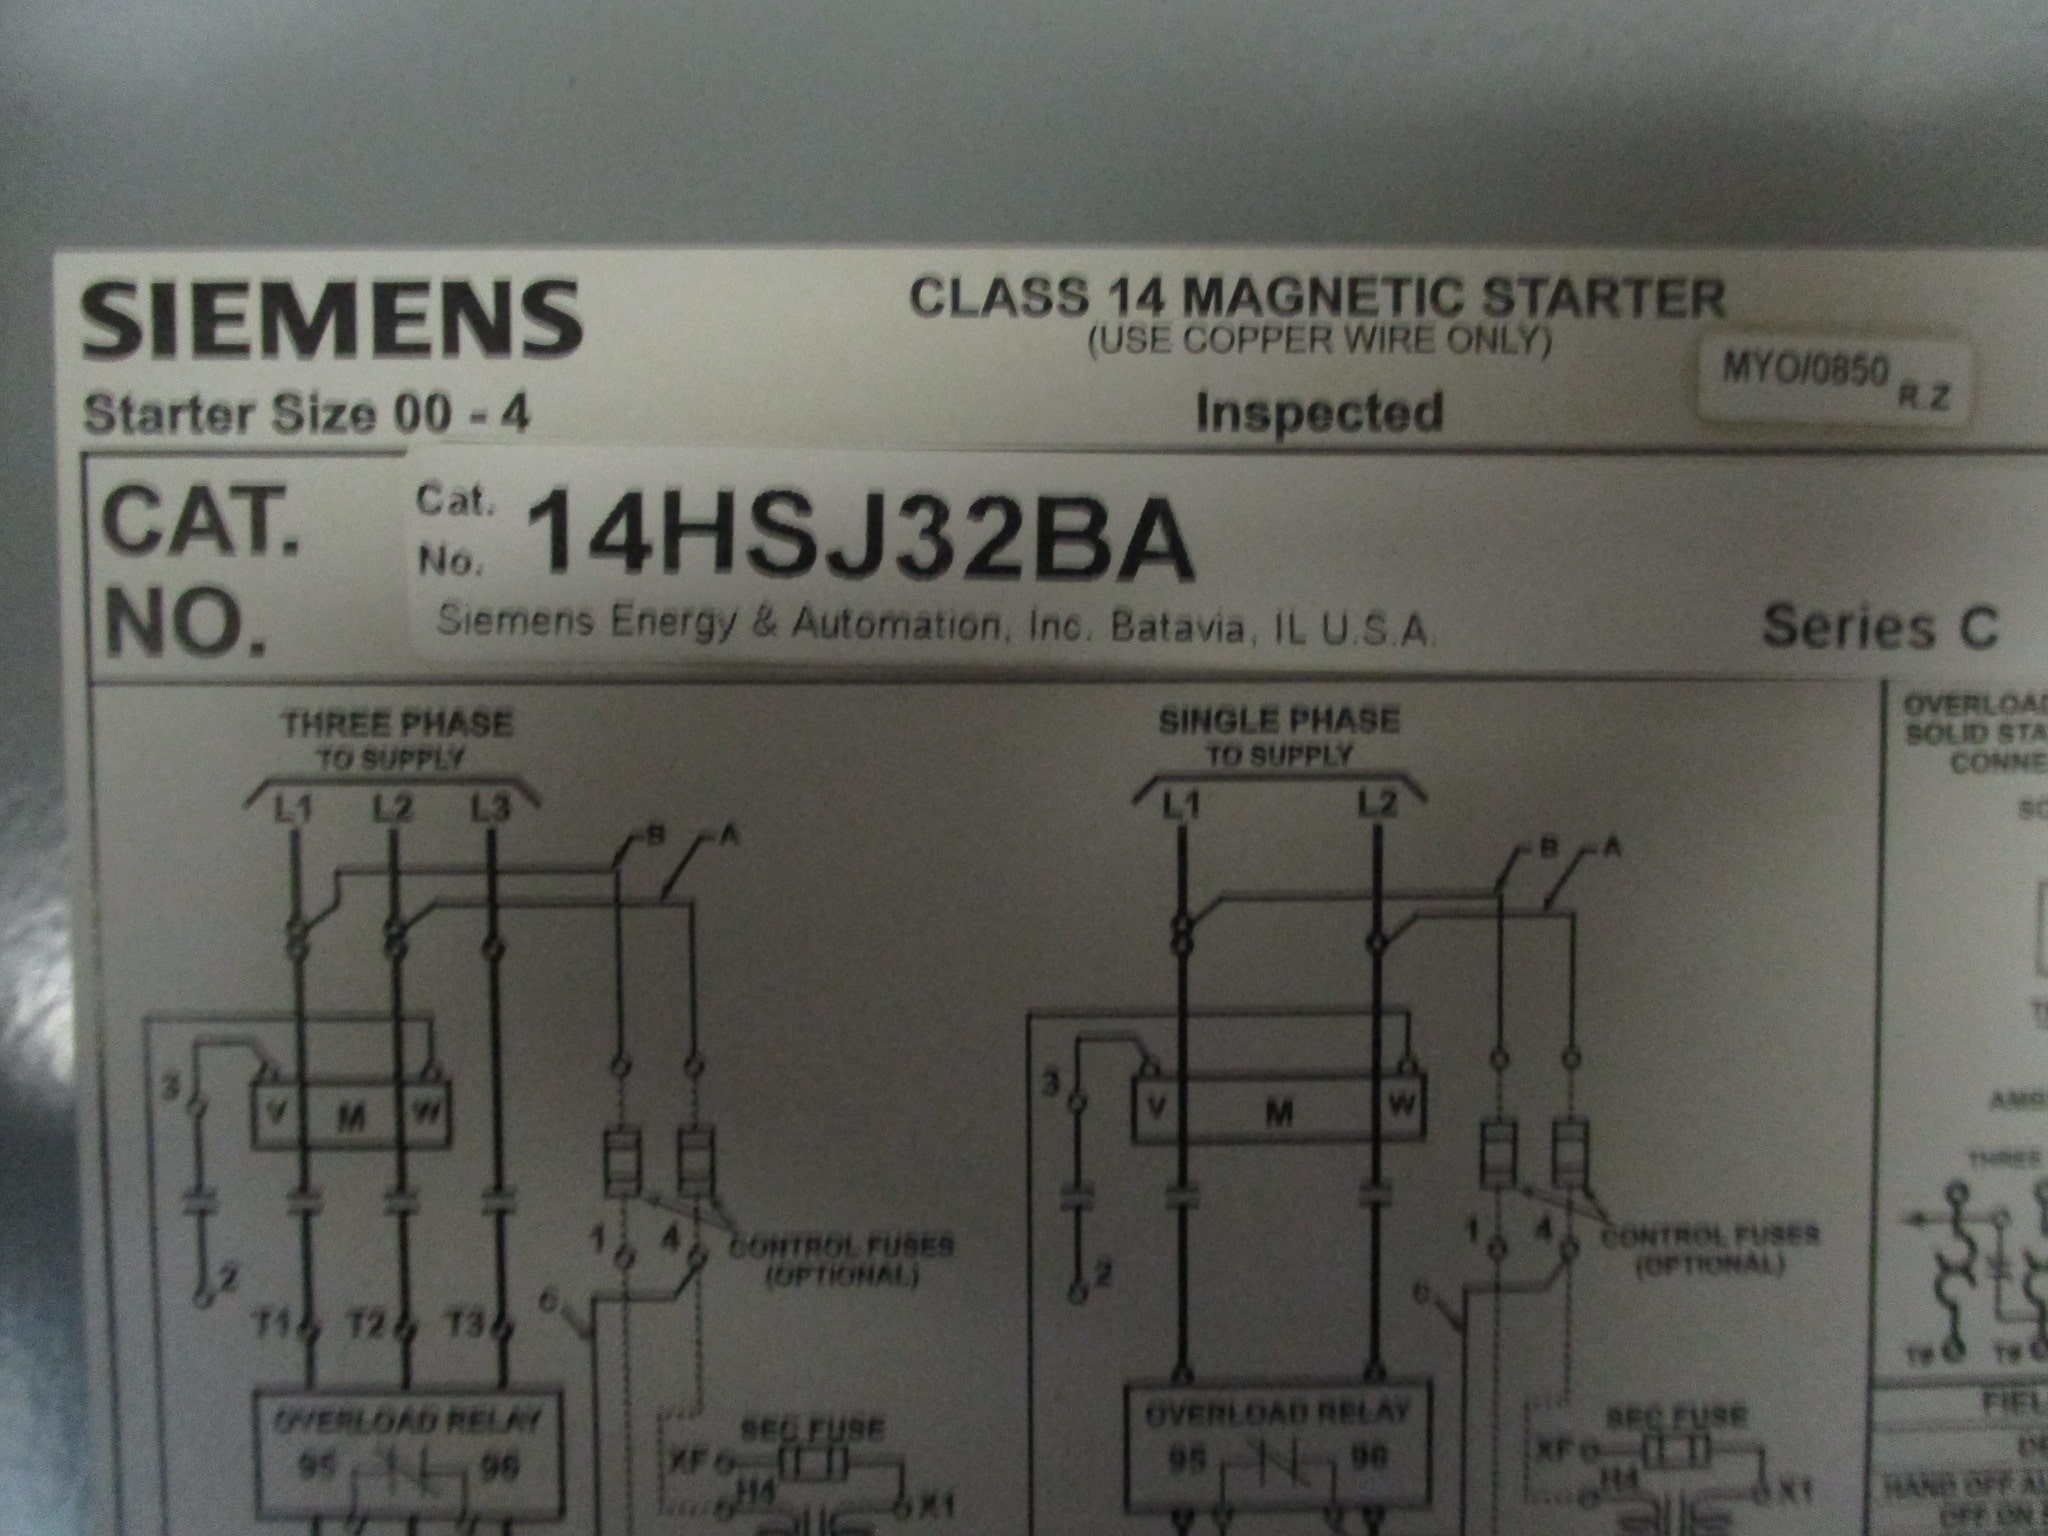 Siemens Magnetic Starter 14hsj32ba